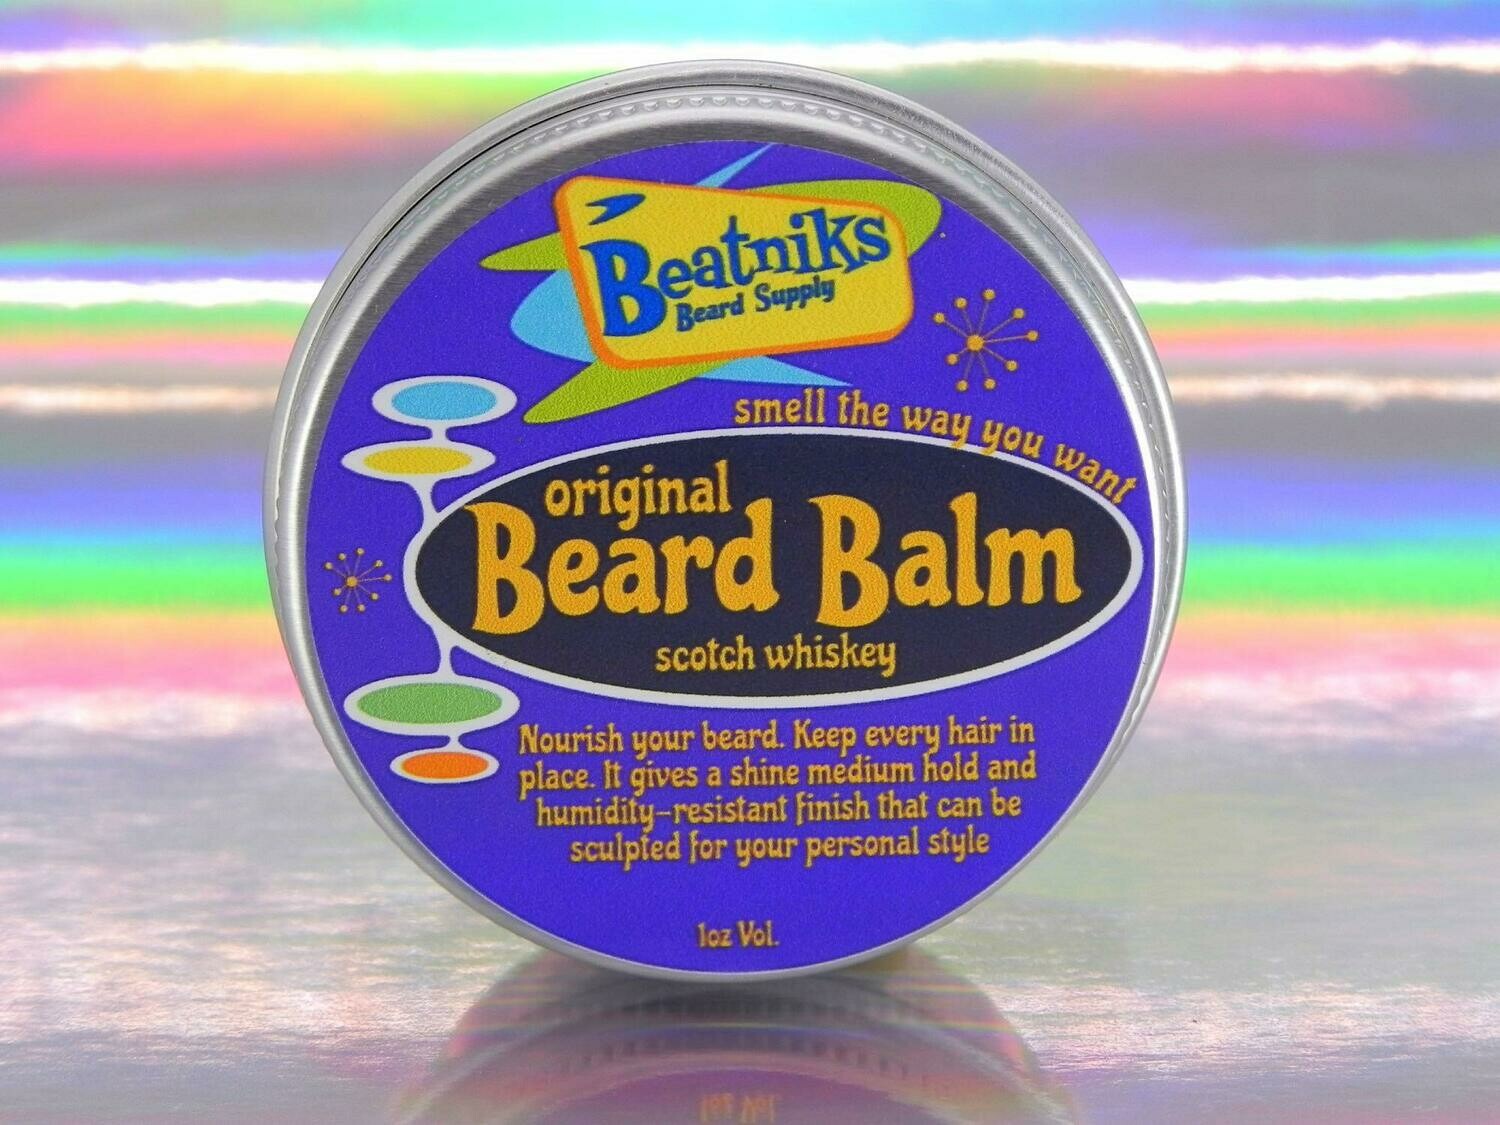 SCOTCH WHISKEY | Beard Balm Original